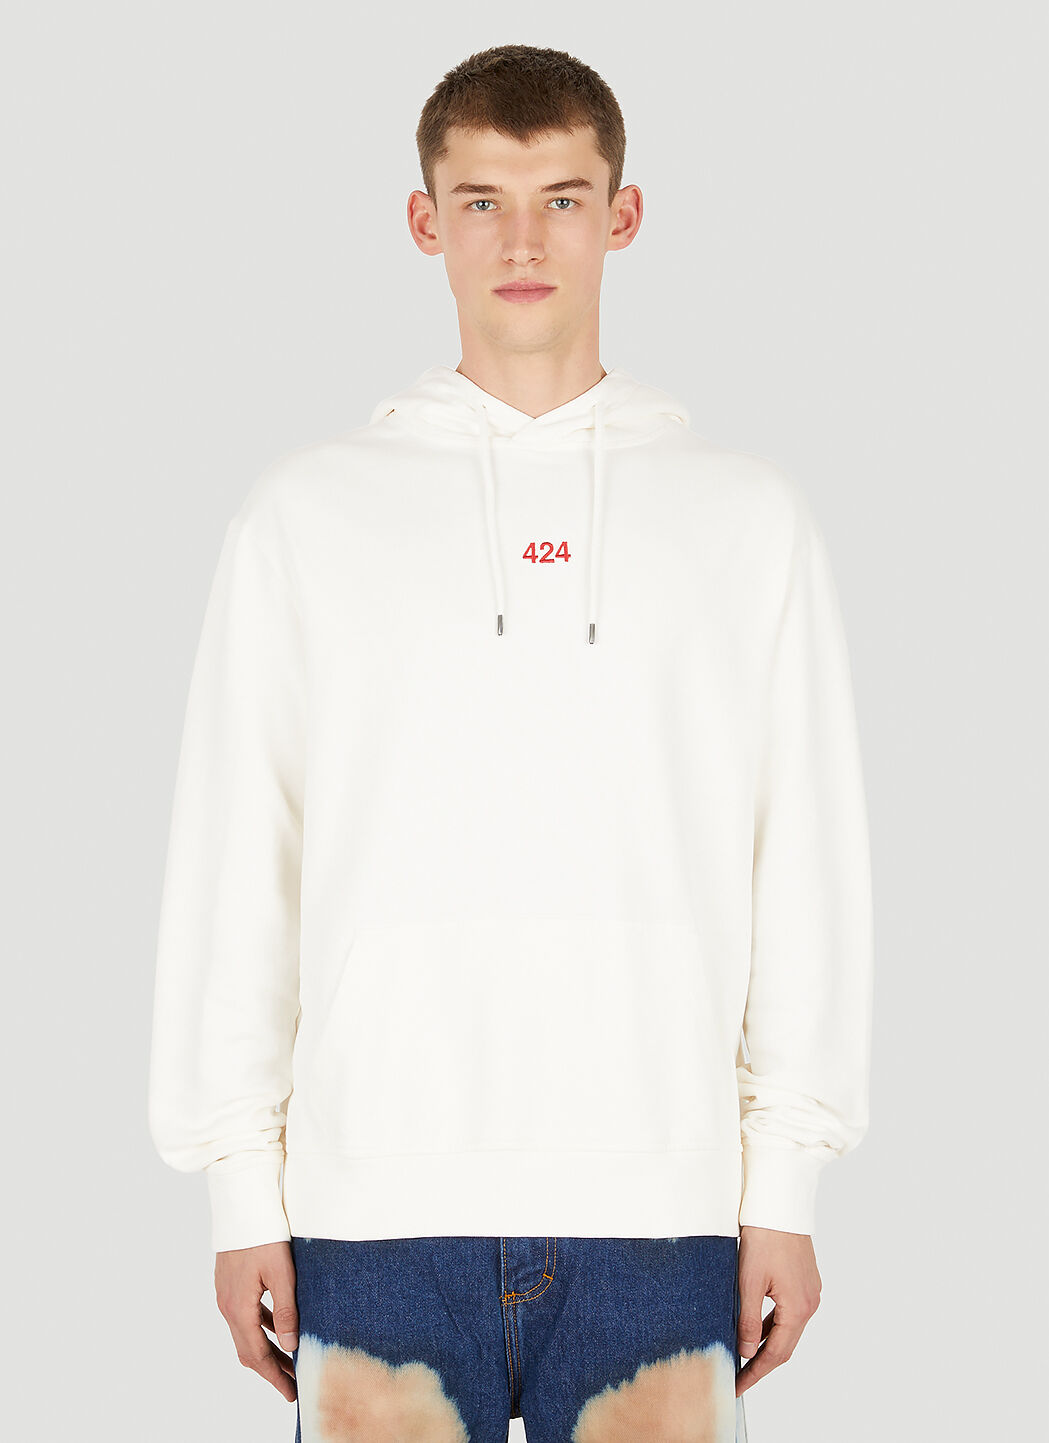 424 Logo Embroidery Hooded Sweatshirt White ftf0150019